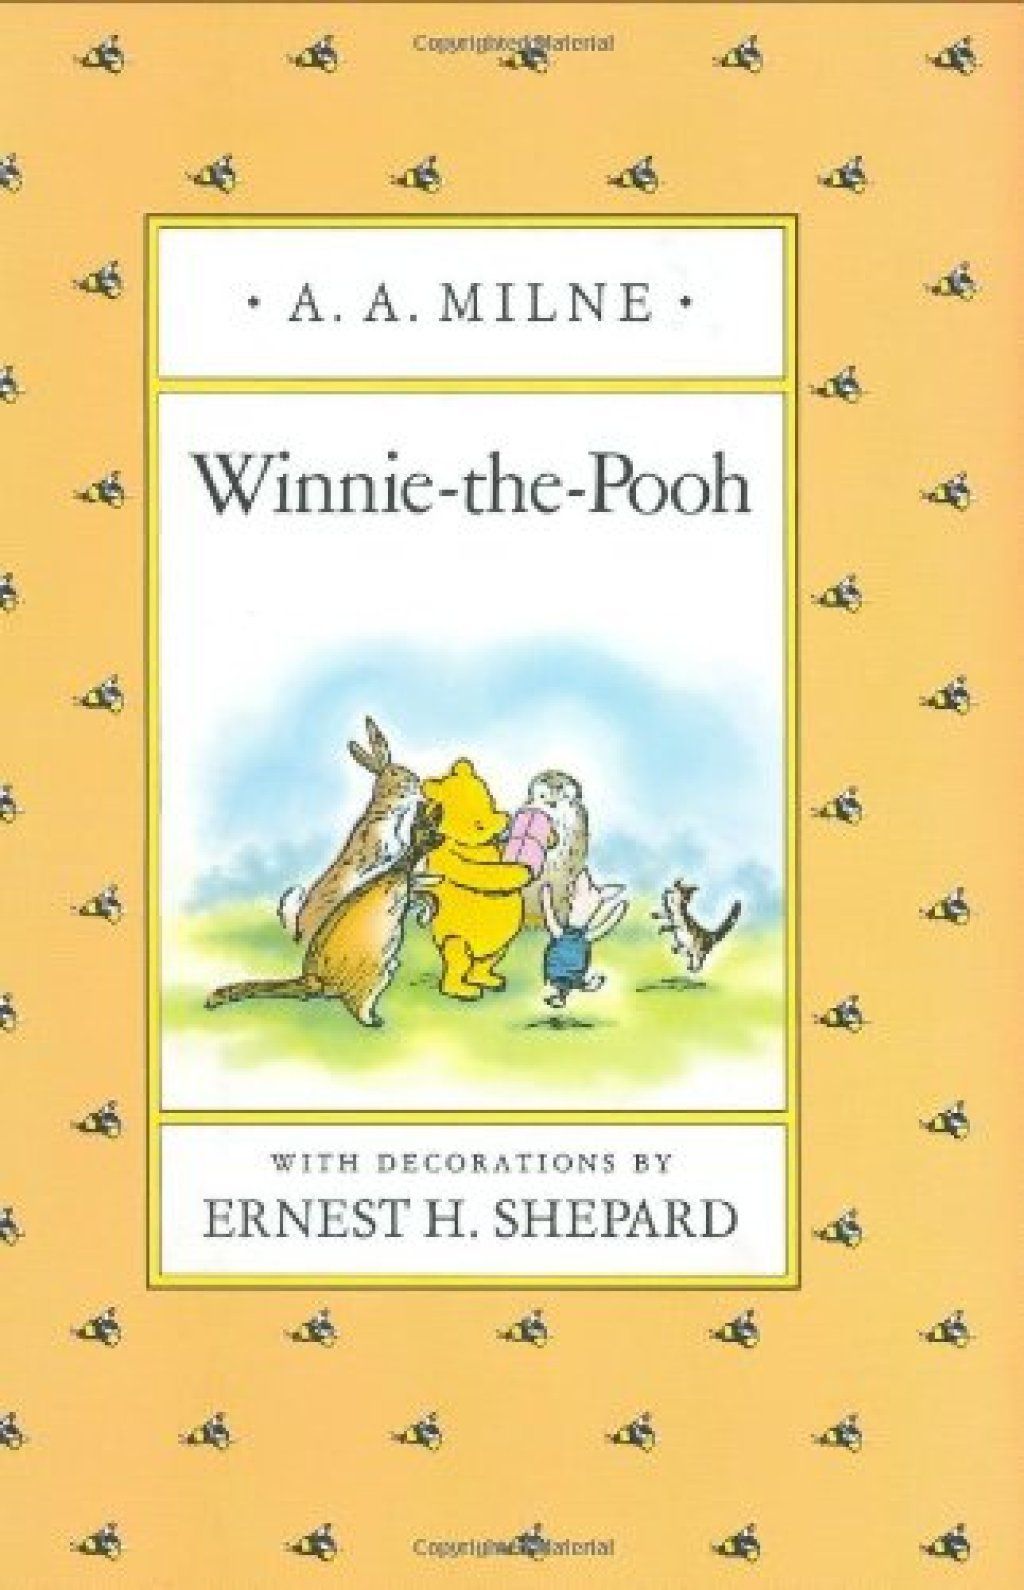 Winnie-the-Pooh A.A. Milne chistes de niños